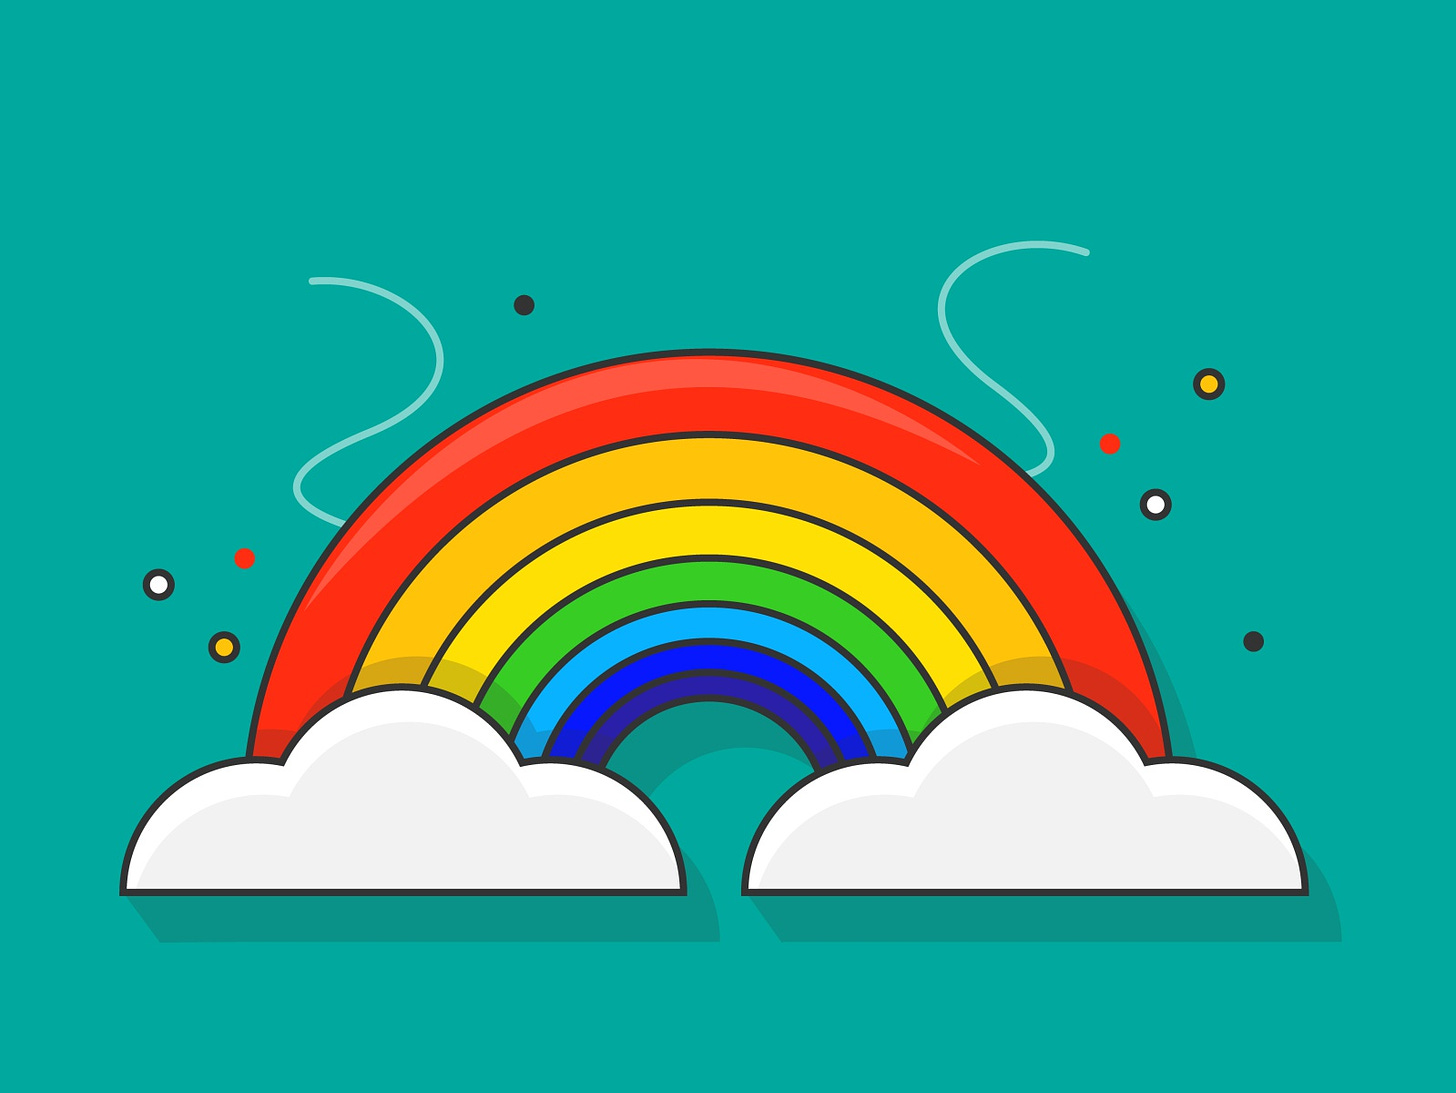 Rainbow by Garin Nugroho on Dribbble